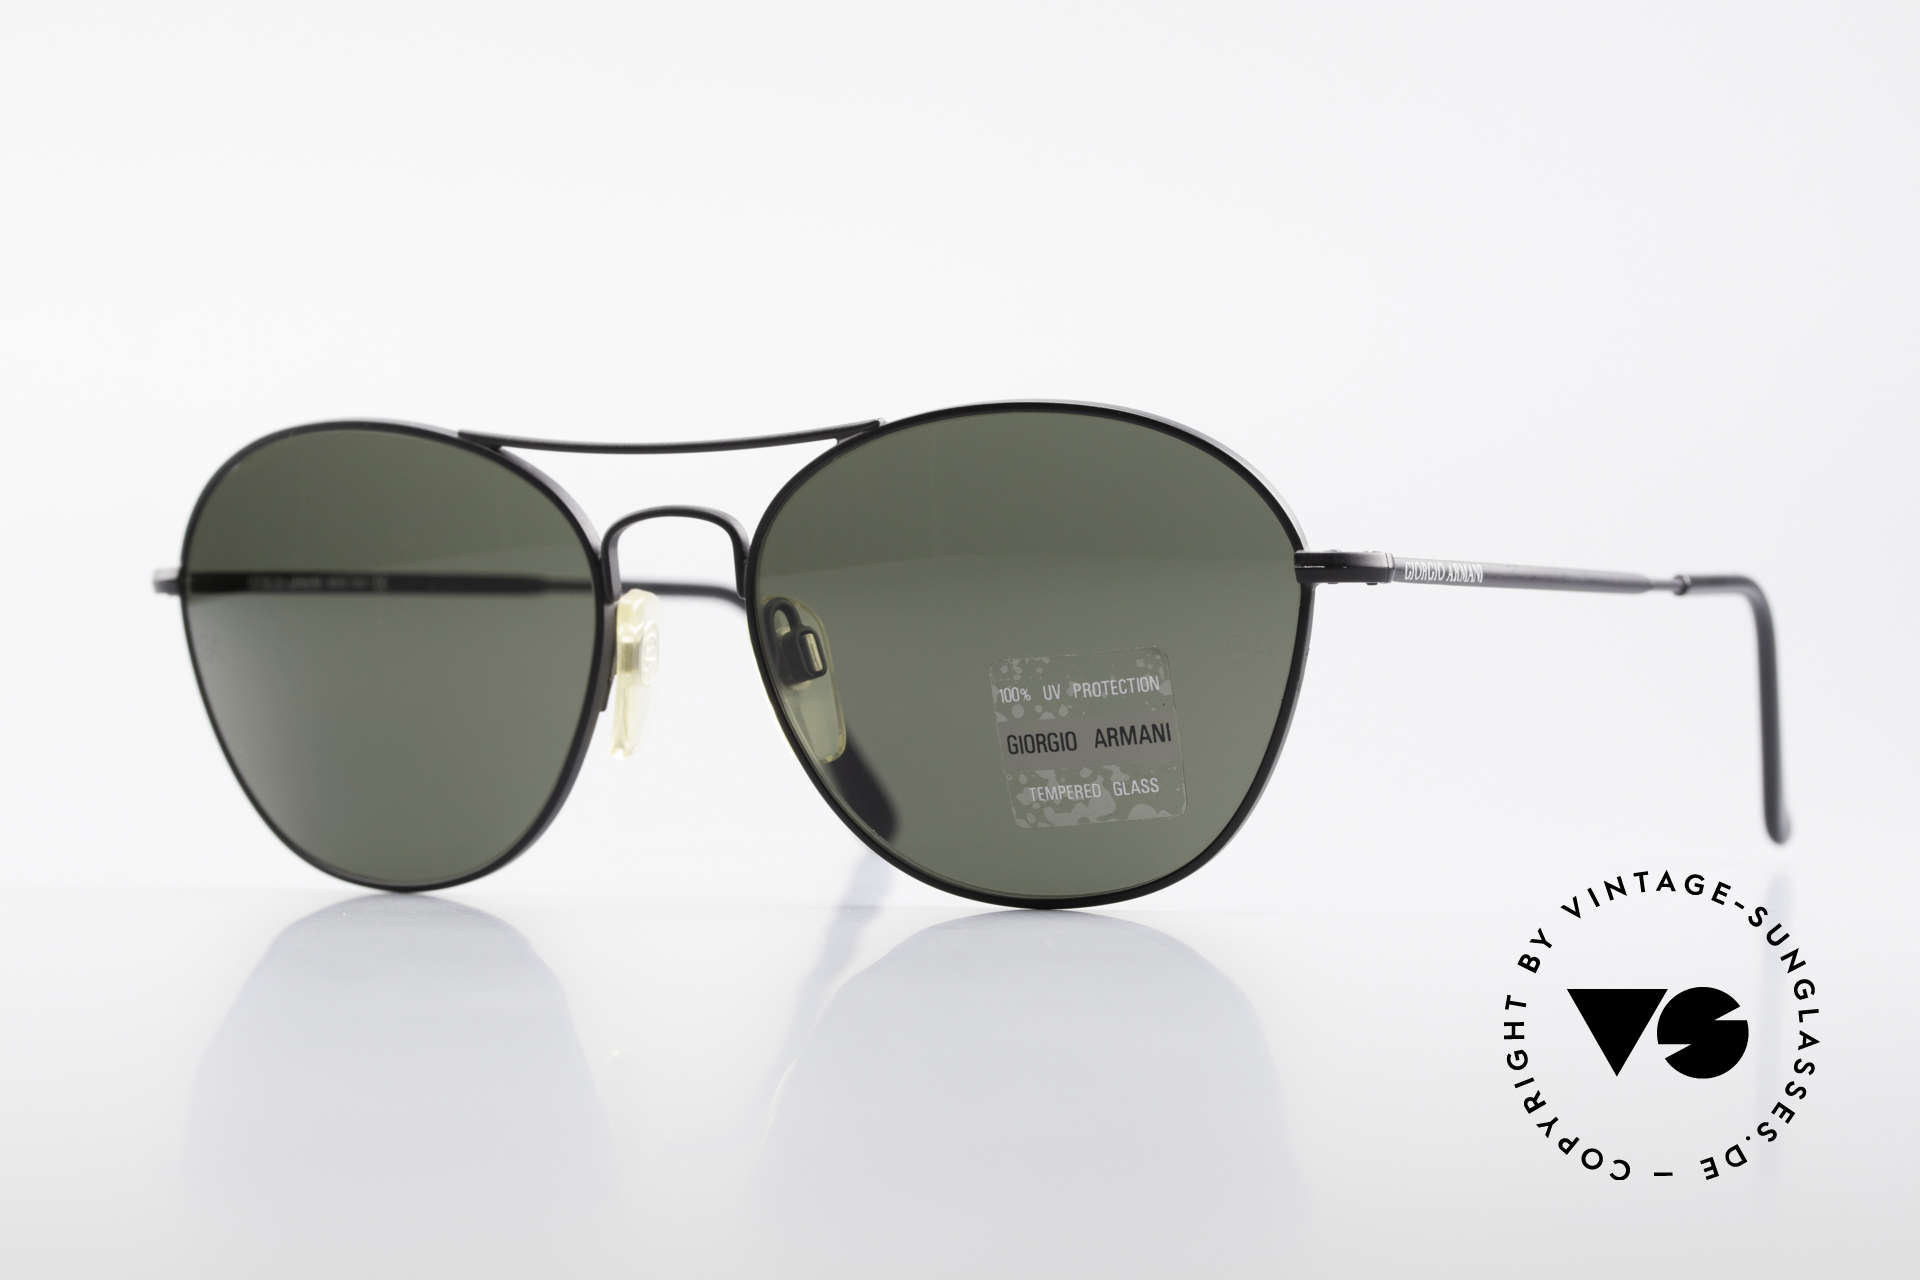 Sunglasses Giorgio Armani 646 Aviator Style Designer Shades